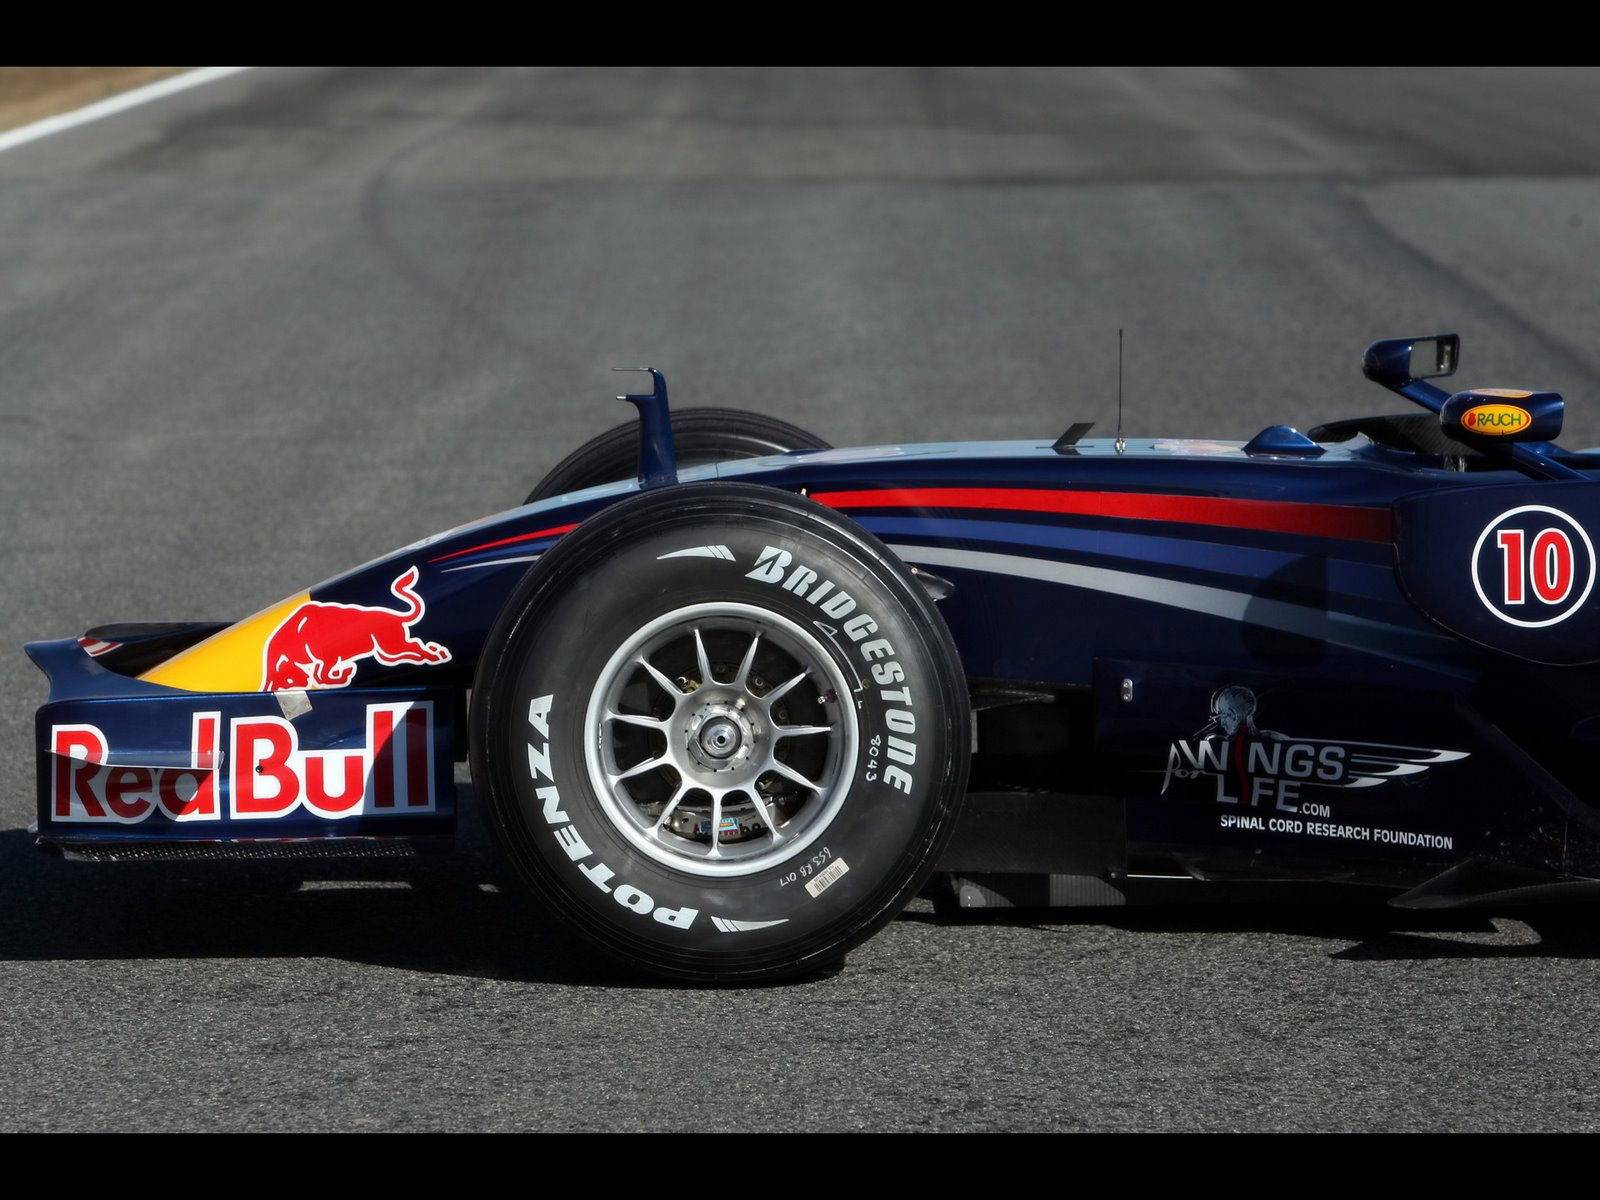 Red Bull Racing レッドブルf1レーシング Red Bull Racing 画像 Naver まとめ